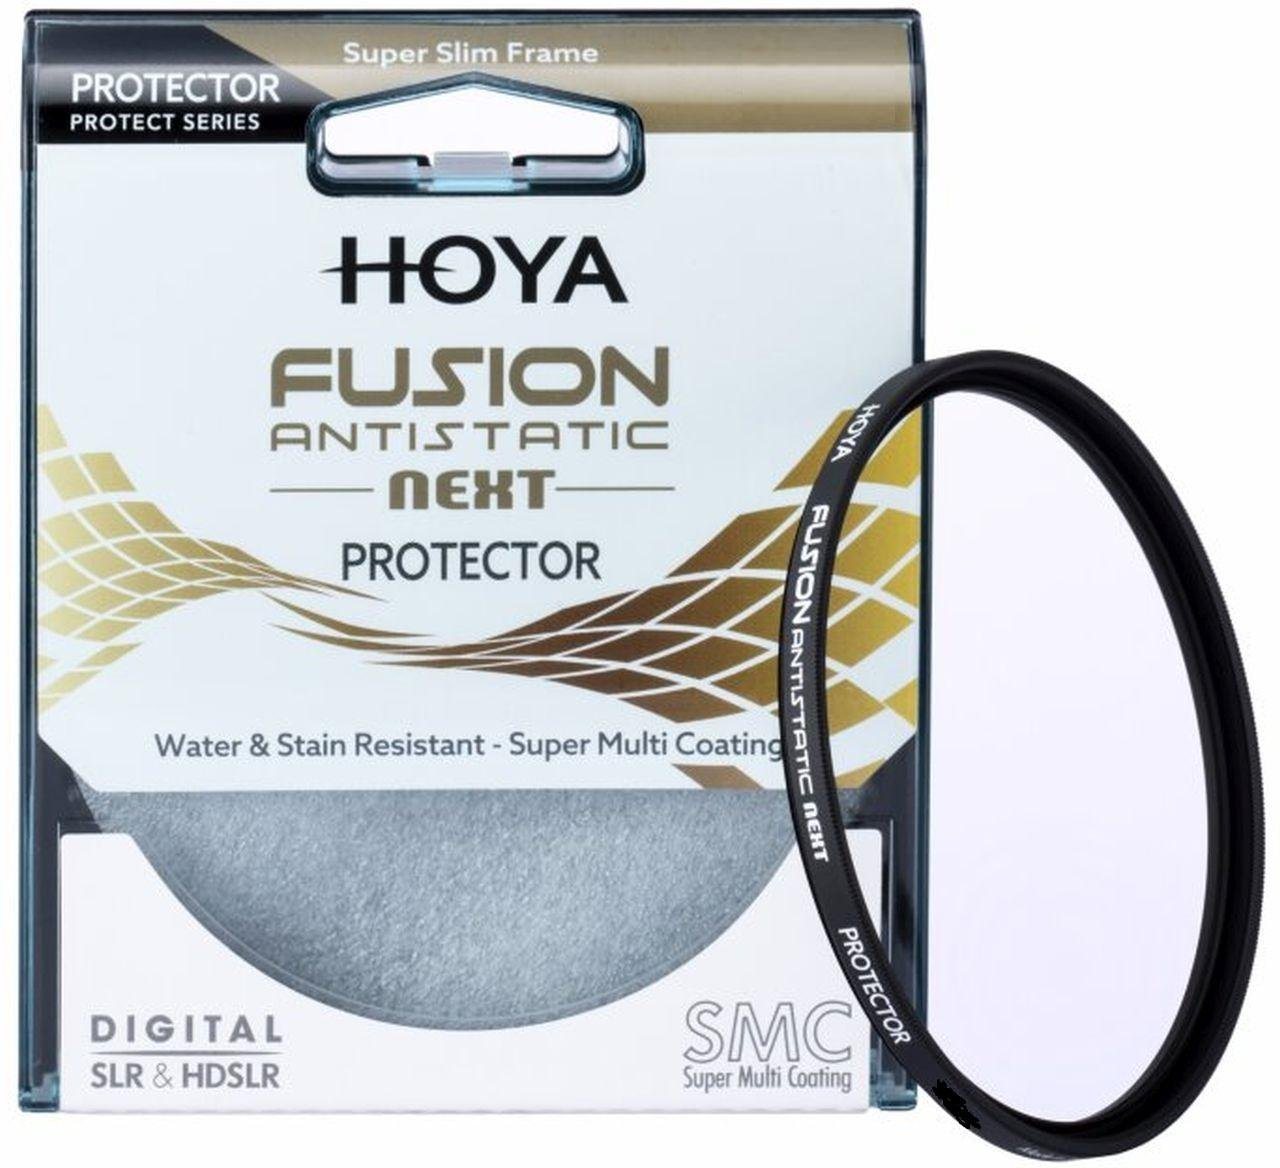 Hoya Fusion Antistatic Next Protector 49mm Objektivzubehör von Hoya